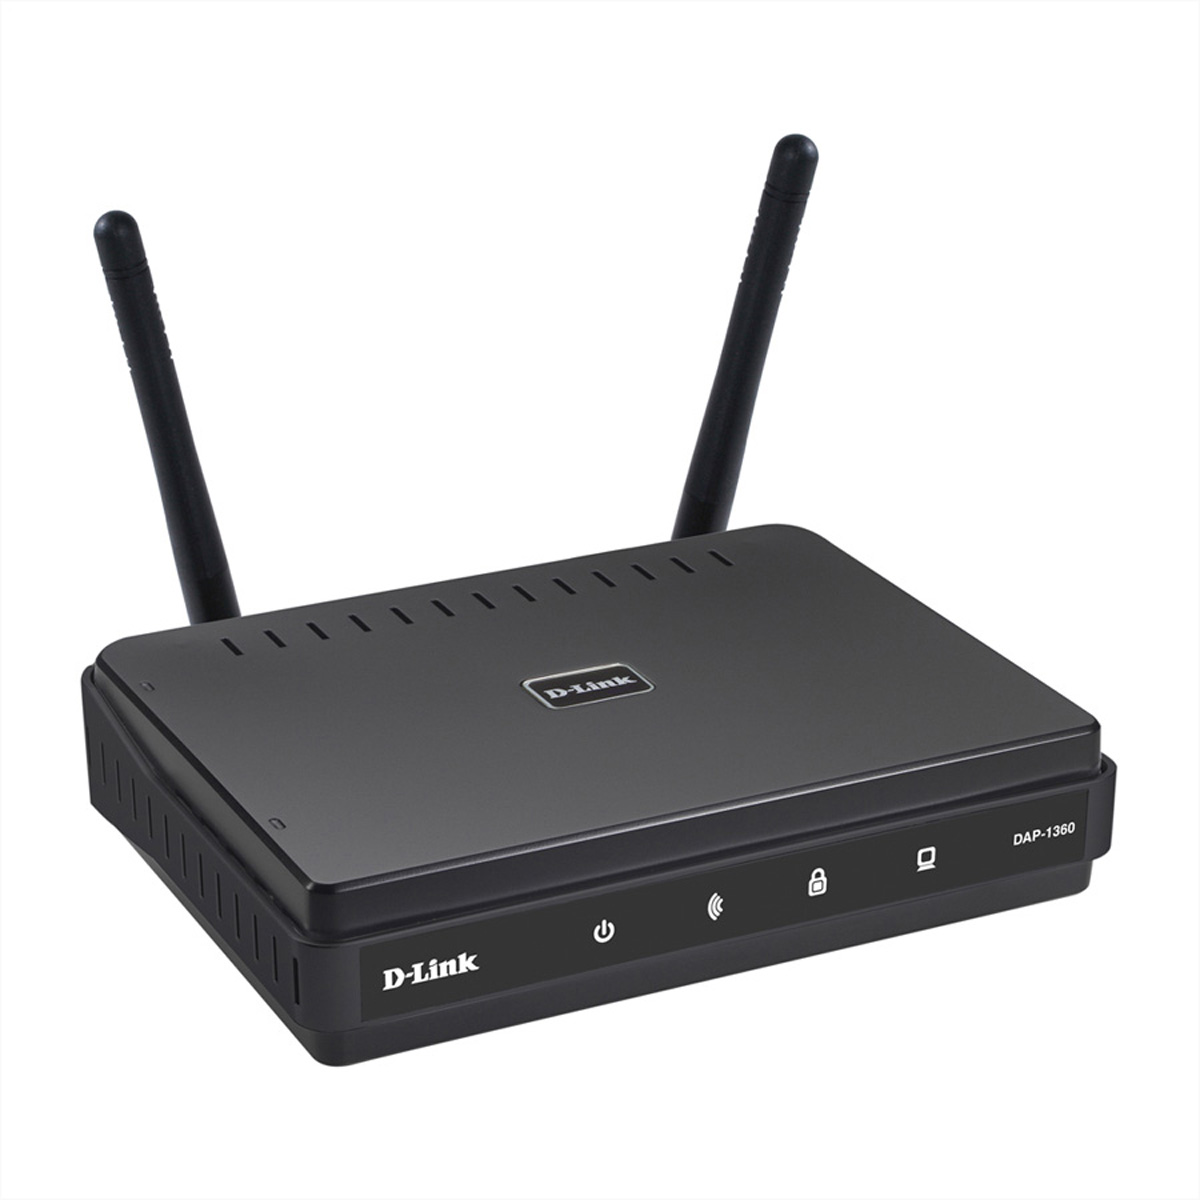 D-Link DAP-1360 Wireless N Open Source Repeater - Drahtlose Basisstation